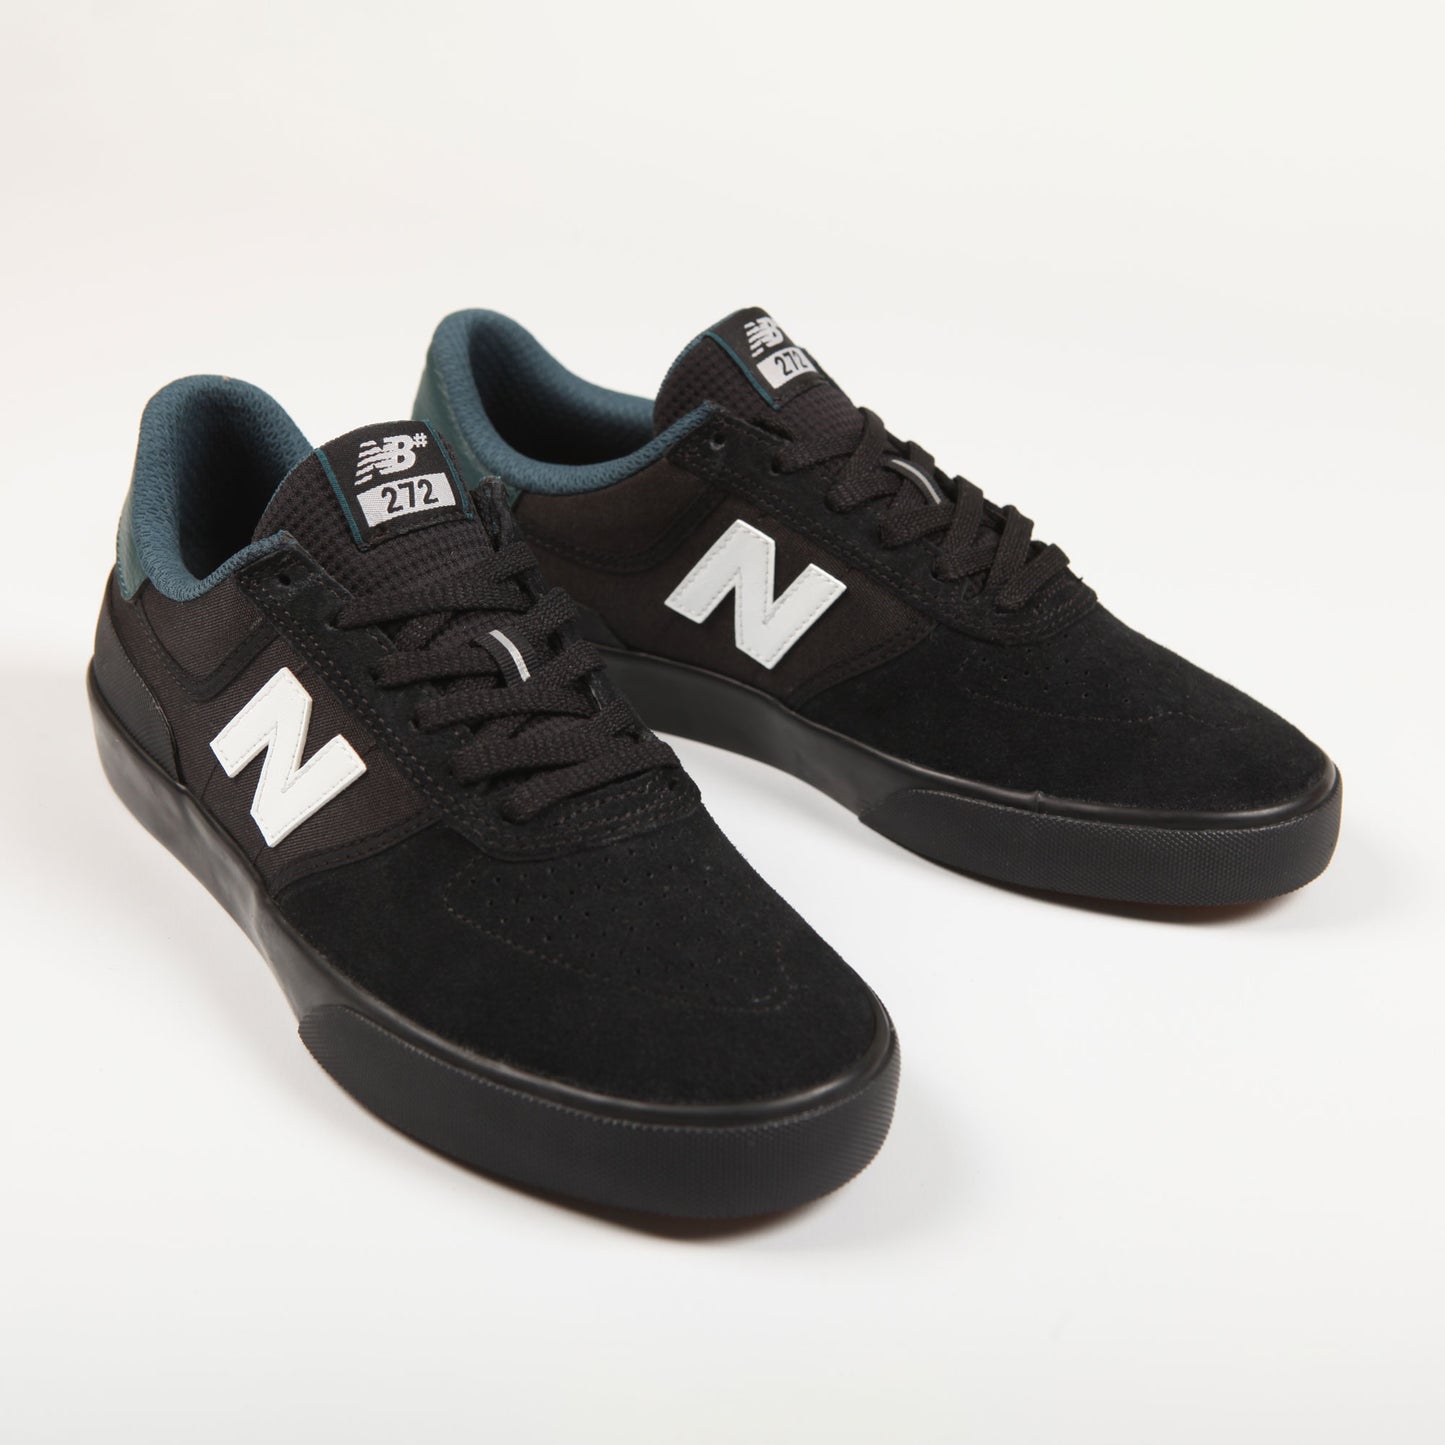 New Balance Numeric '272' Skate Shoes (Black / White)